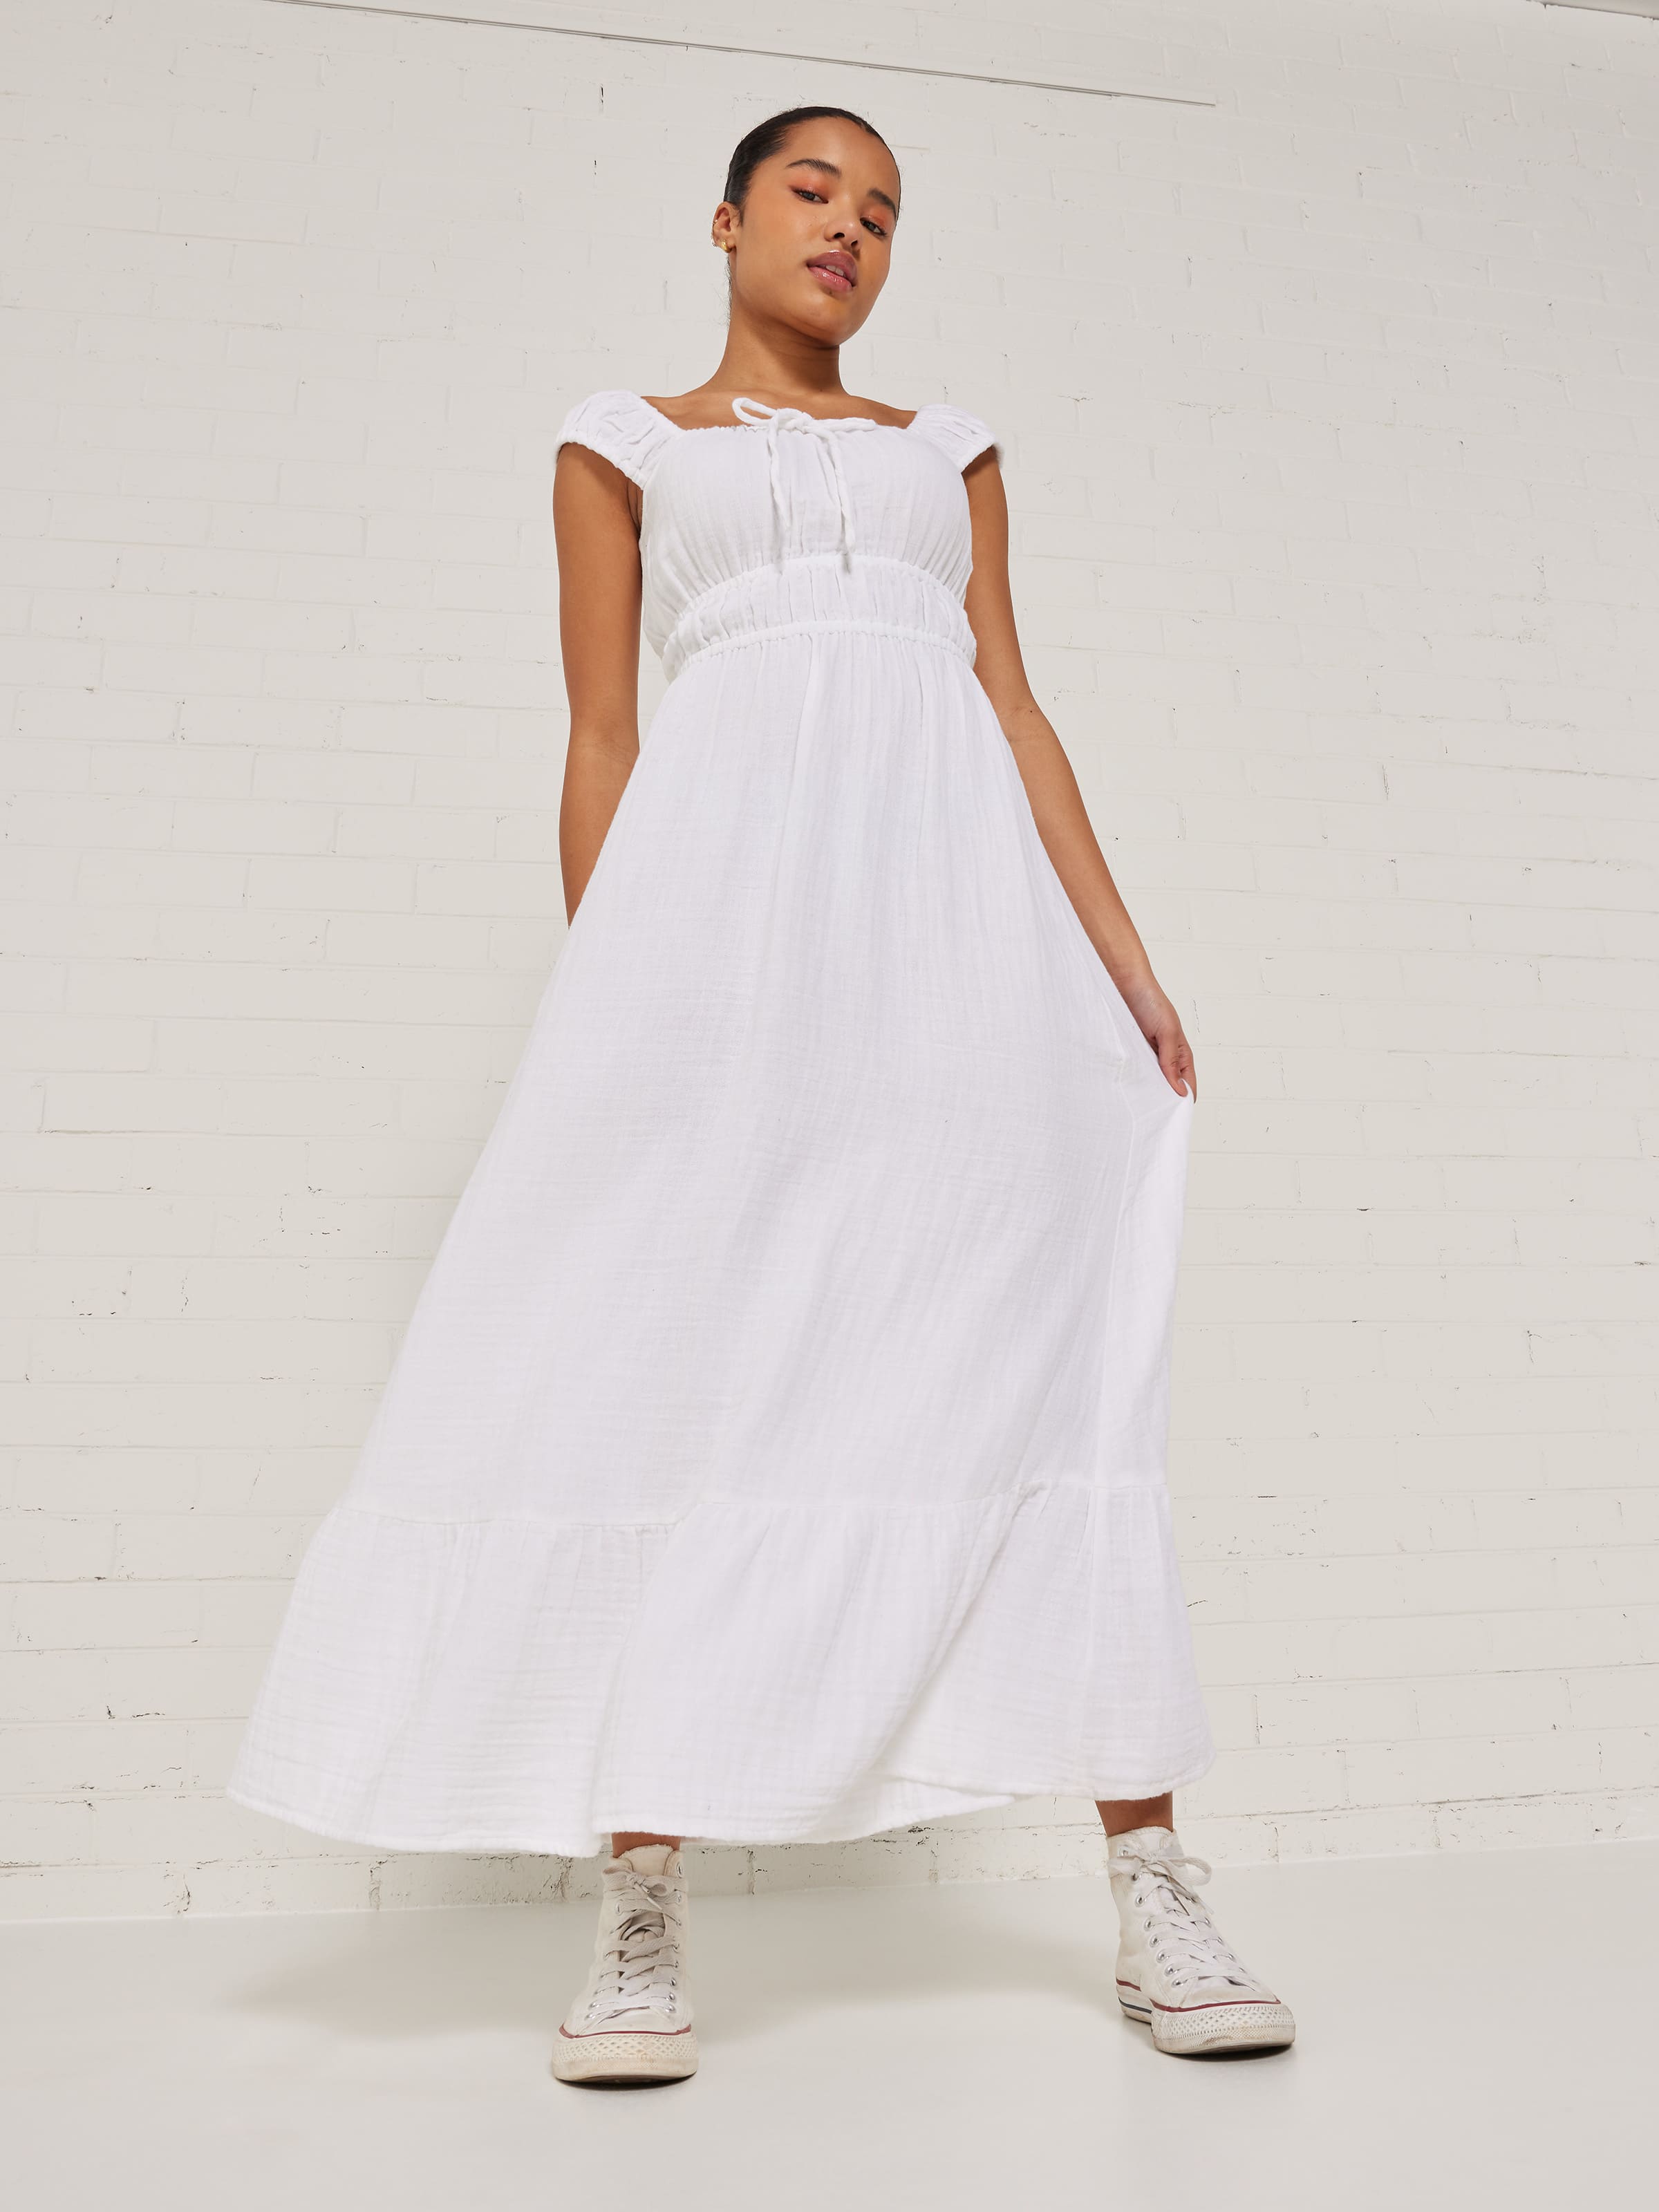 White Long Sleeve Dress - Mermaid Maxi Dress - V-Neck Dress - Lulus